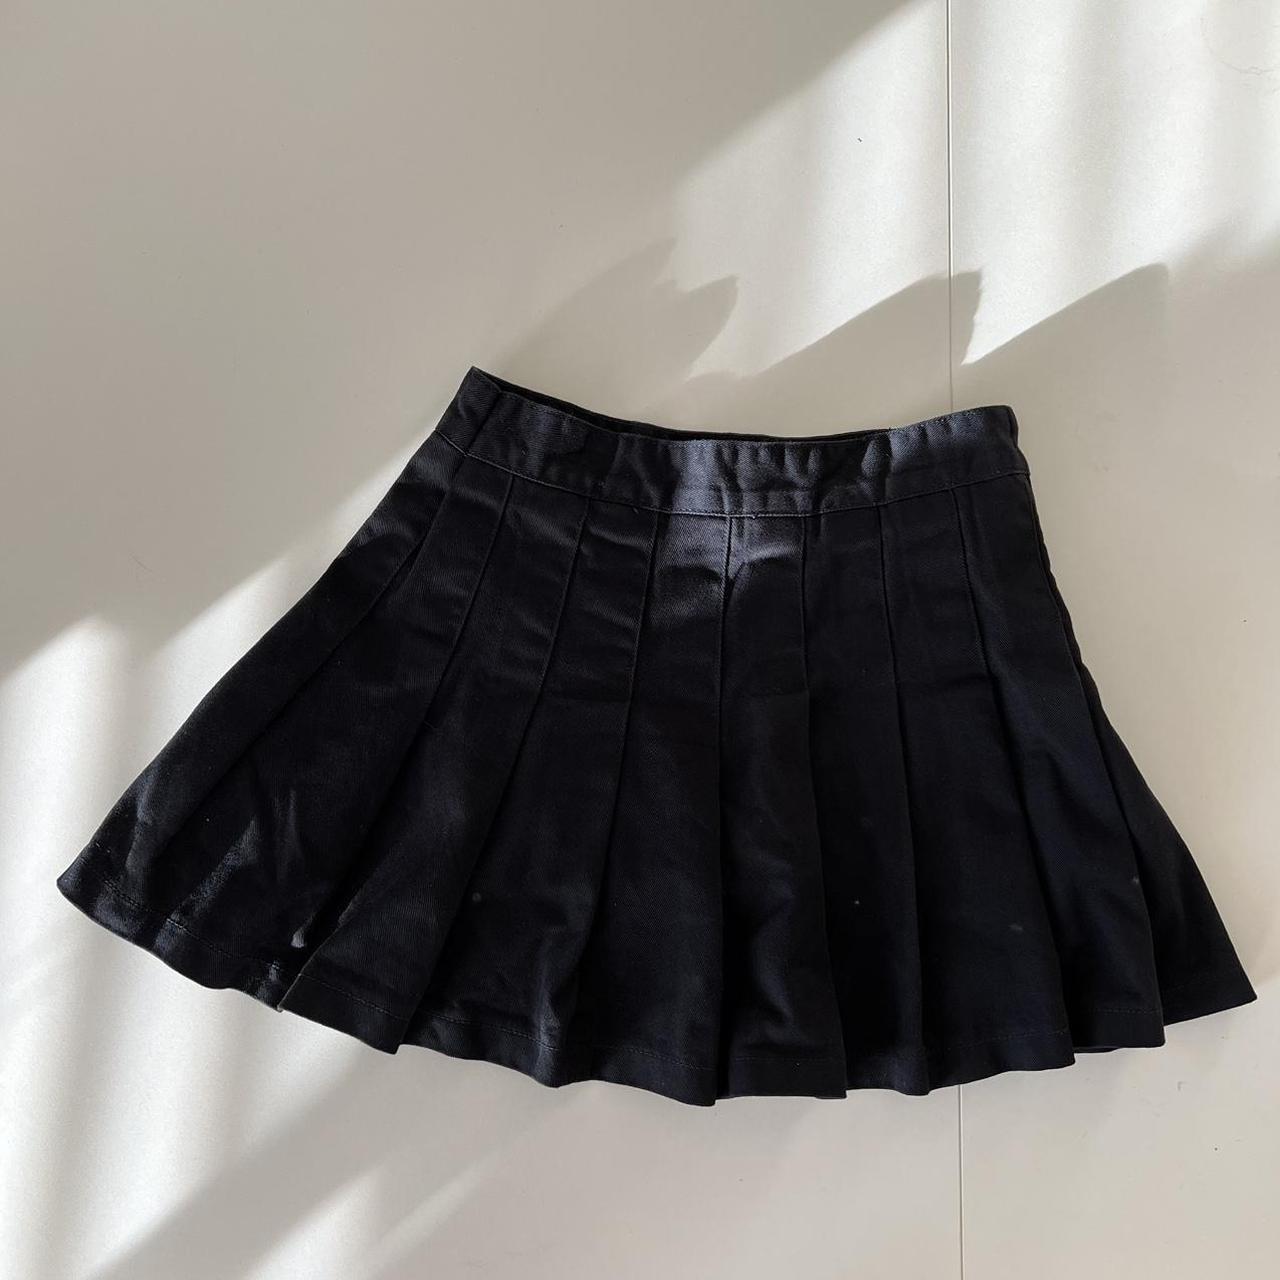 Brandy Melville Women's Navy Skirt | Depop